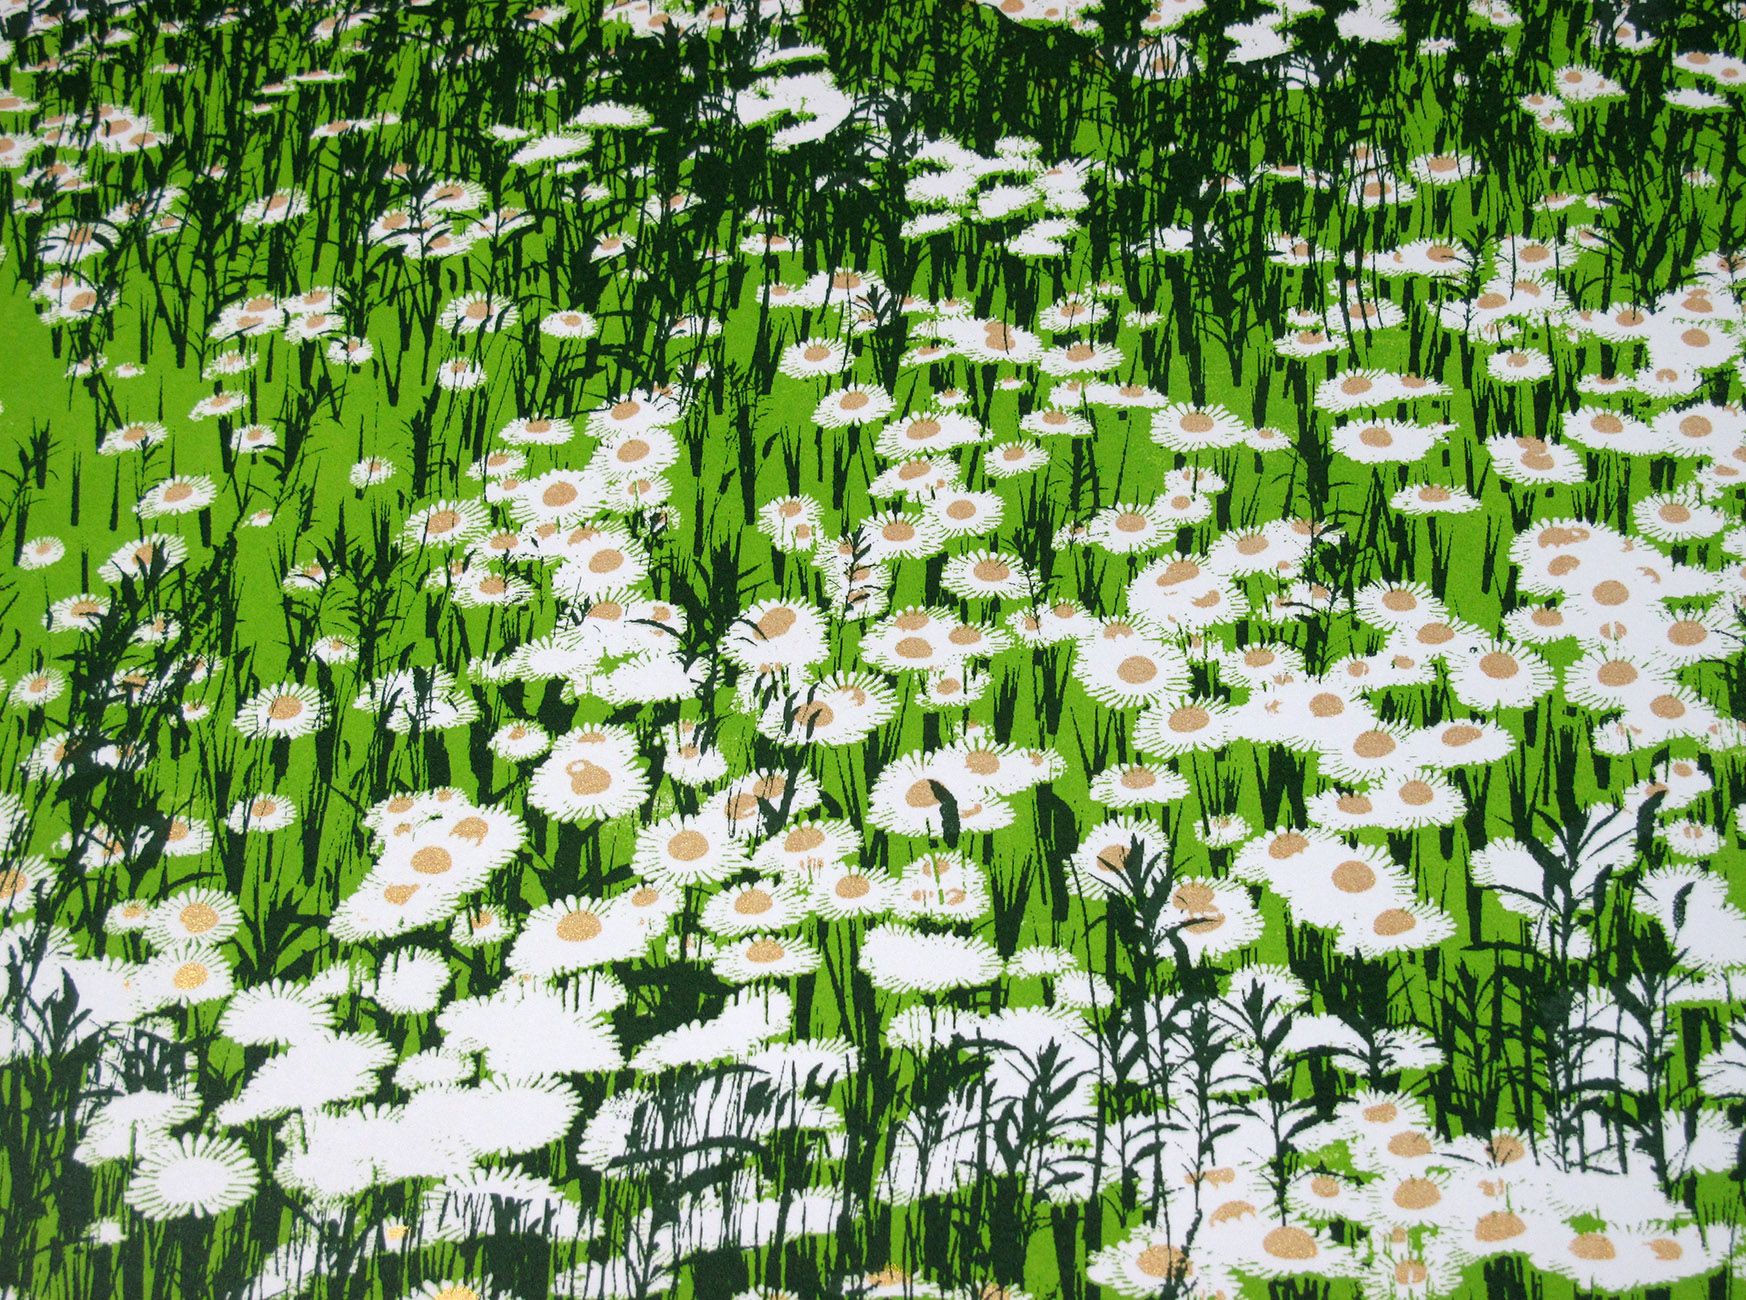 Daisy Field by Chris Keegan - Secondary Image